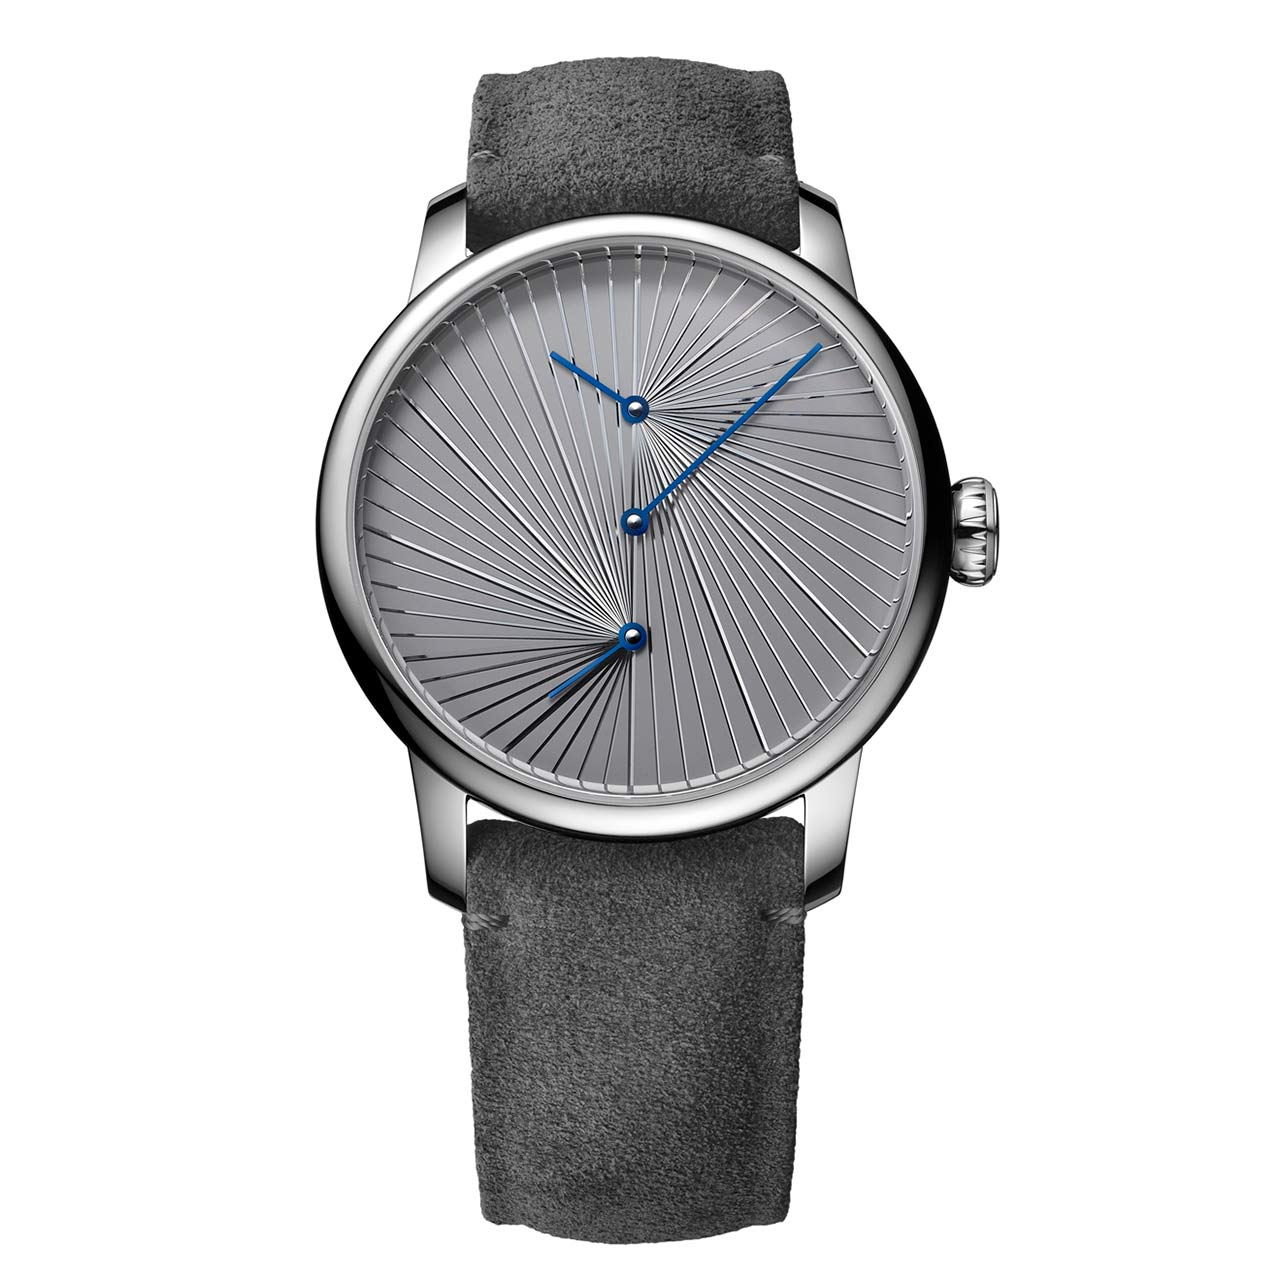 Louis Erard wristwatch